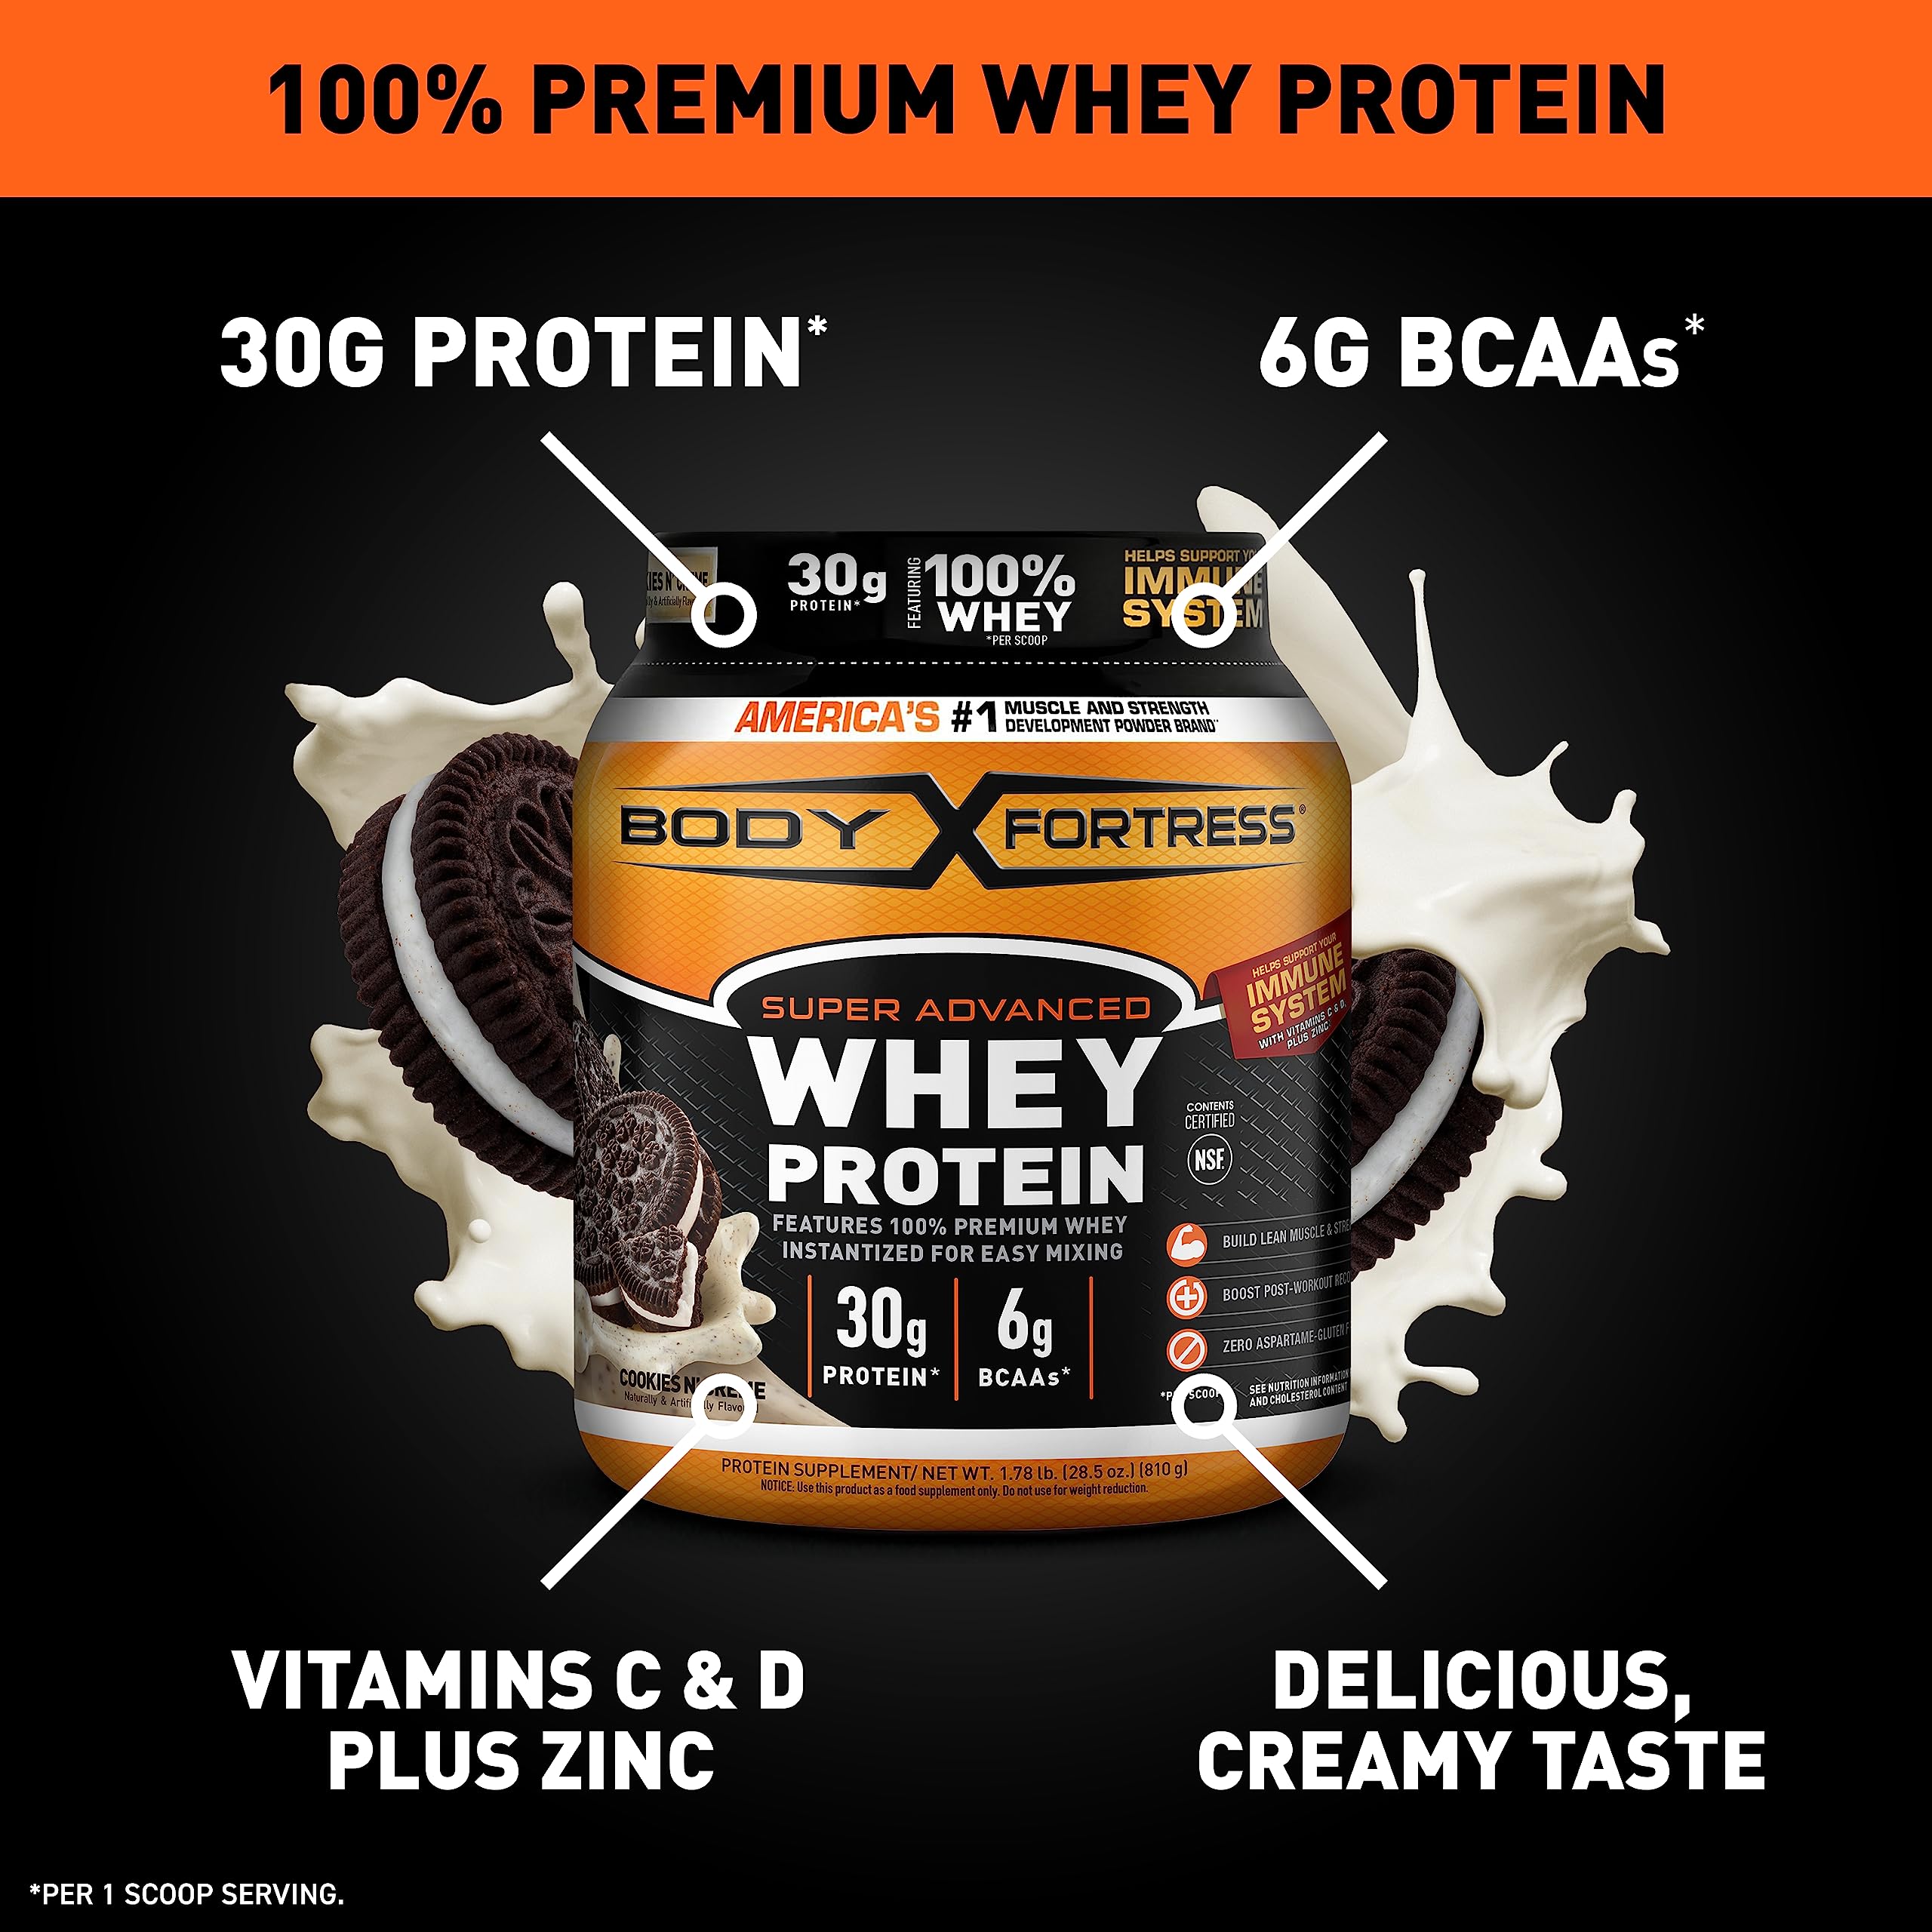 Body Fortress Super Advanced Whey Protein Powder, Cookies N’ Crème, Immune Support (1), Vitamins C & D Plus Zinc, 1.78 lbs